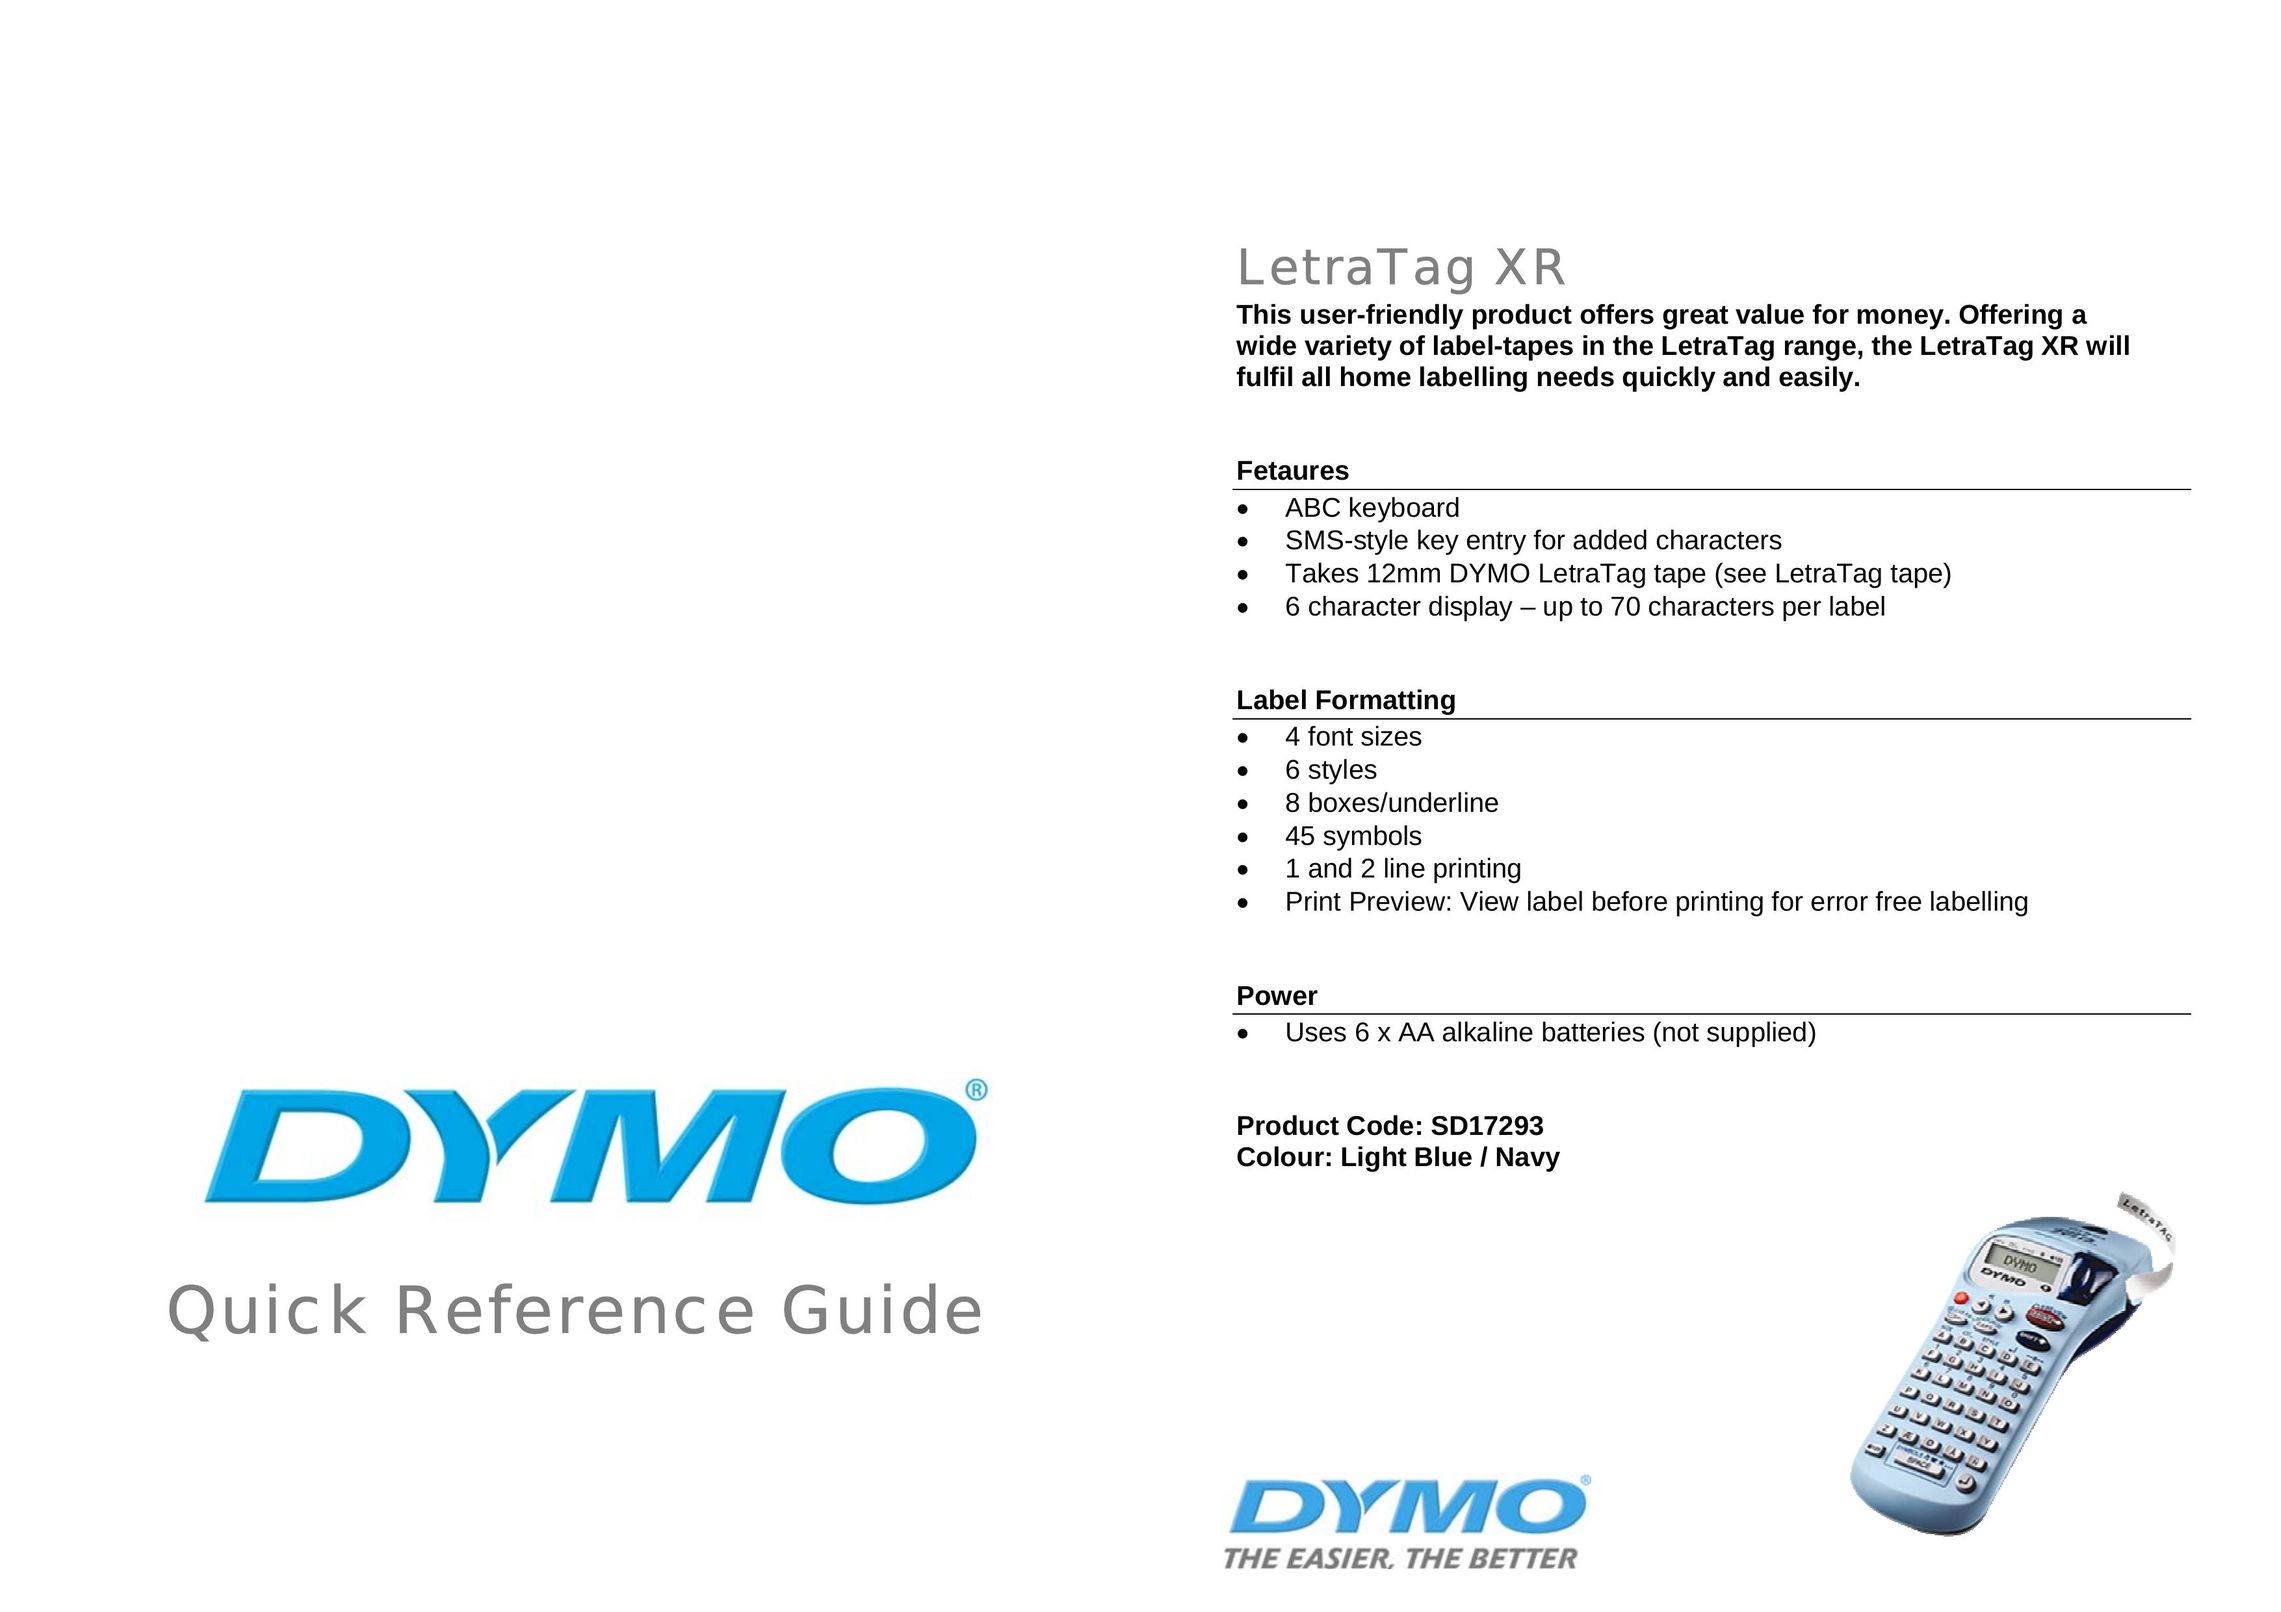 Dymo SD17293 Label Maker User Manual